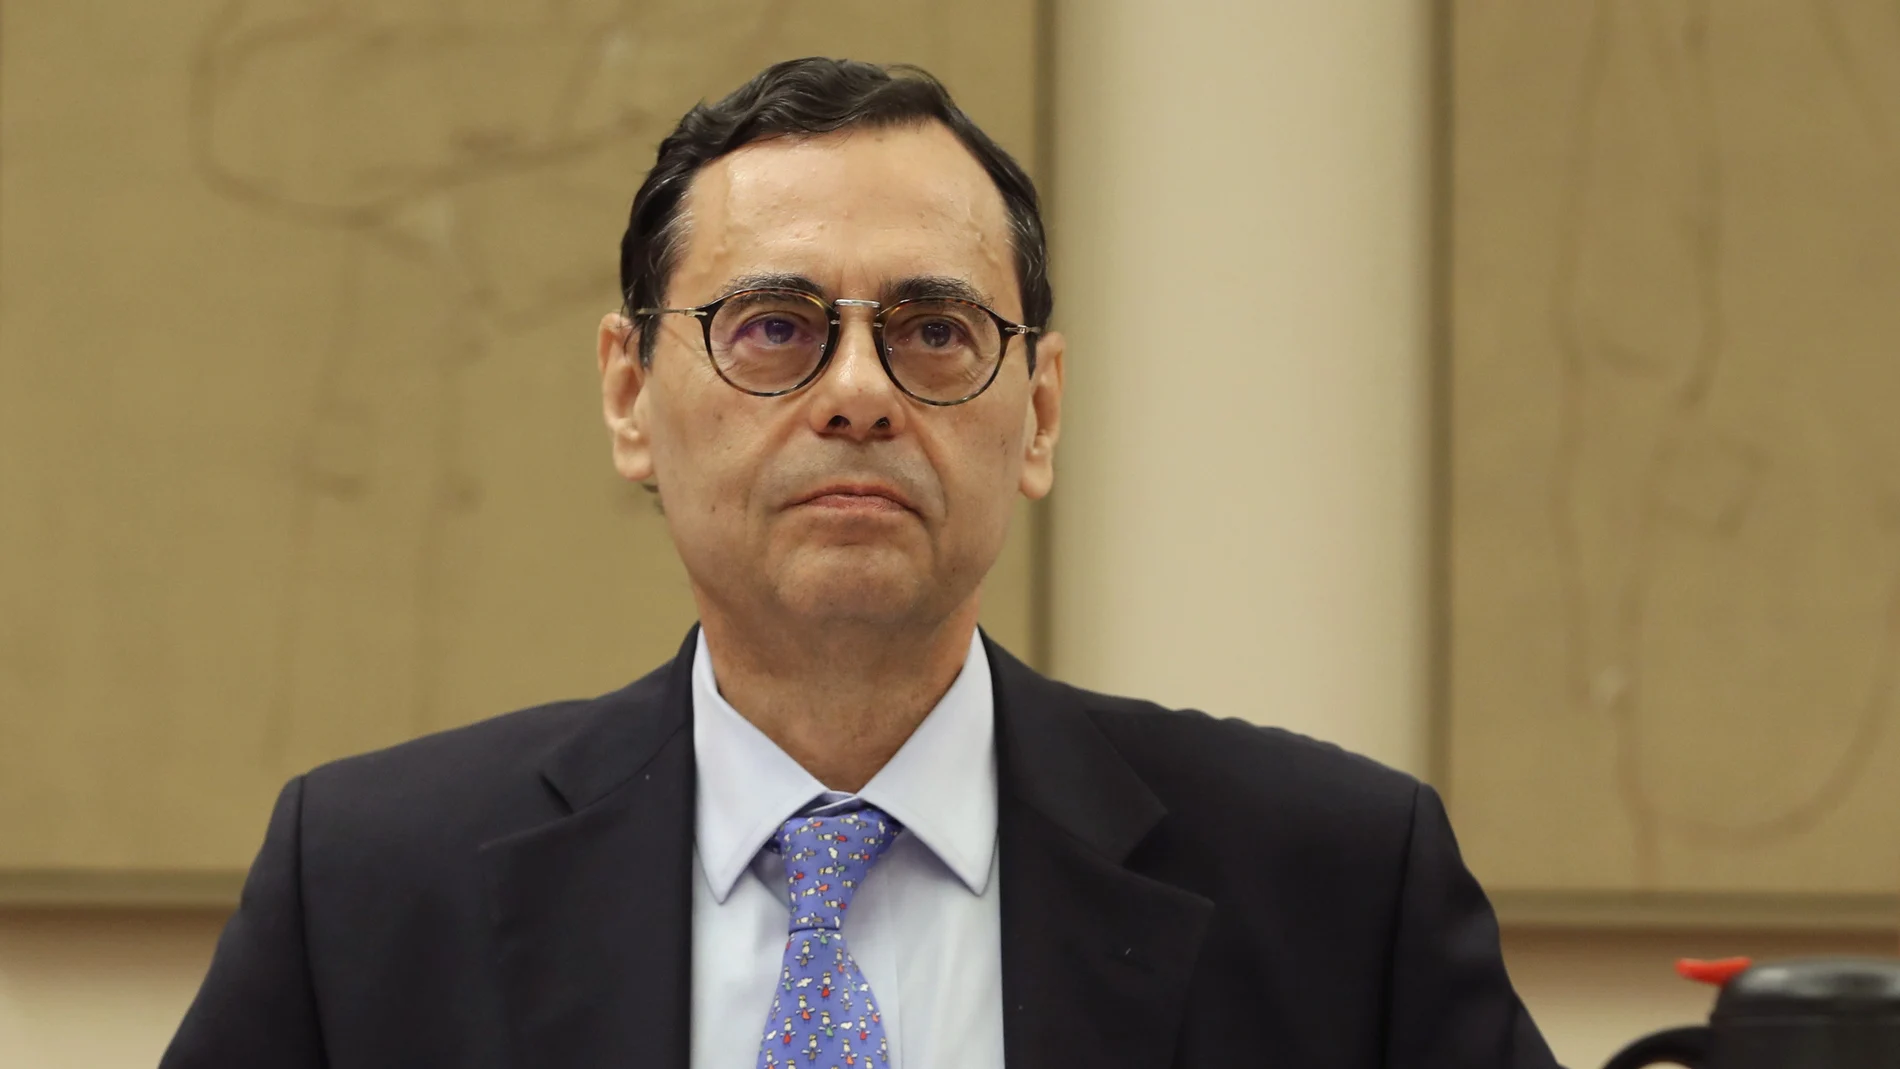 Jaime Caruana, exgobernador del Banco de España